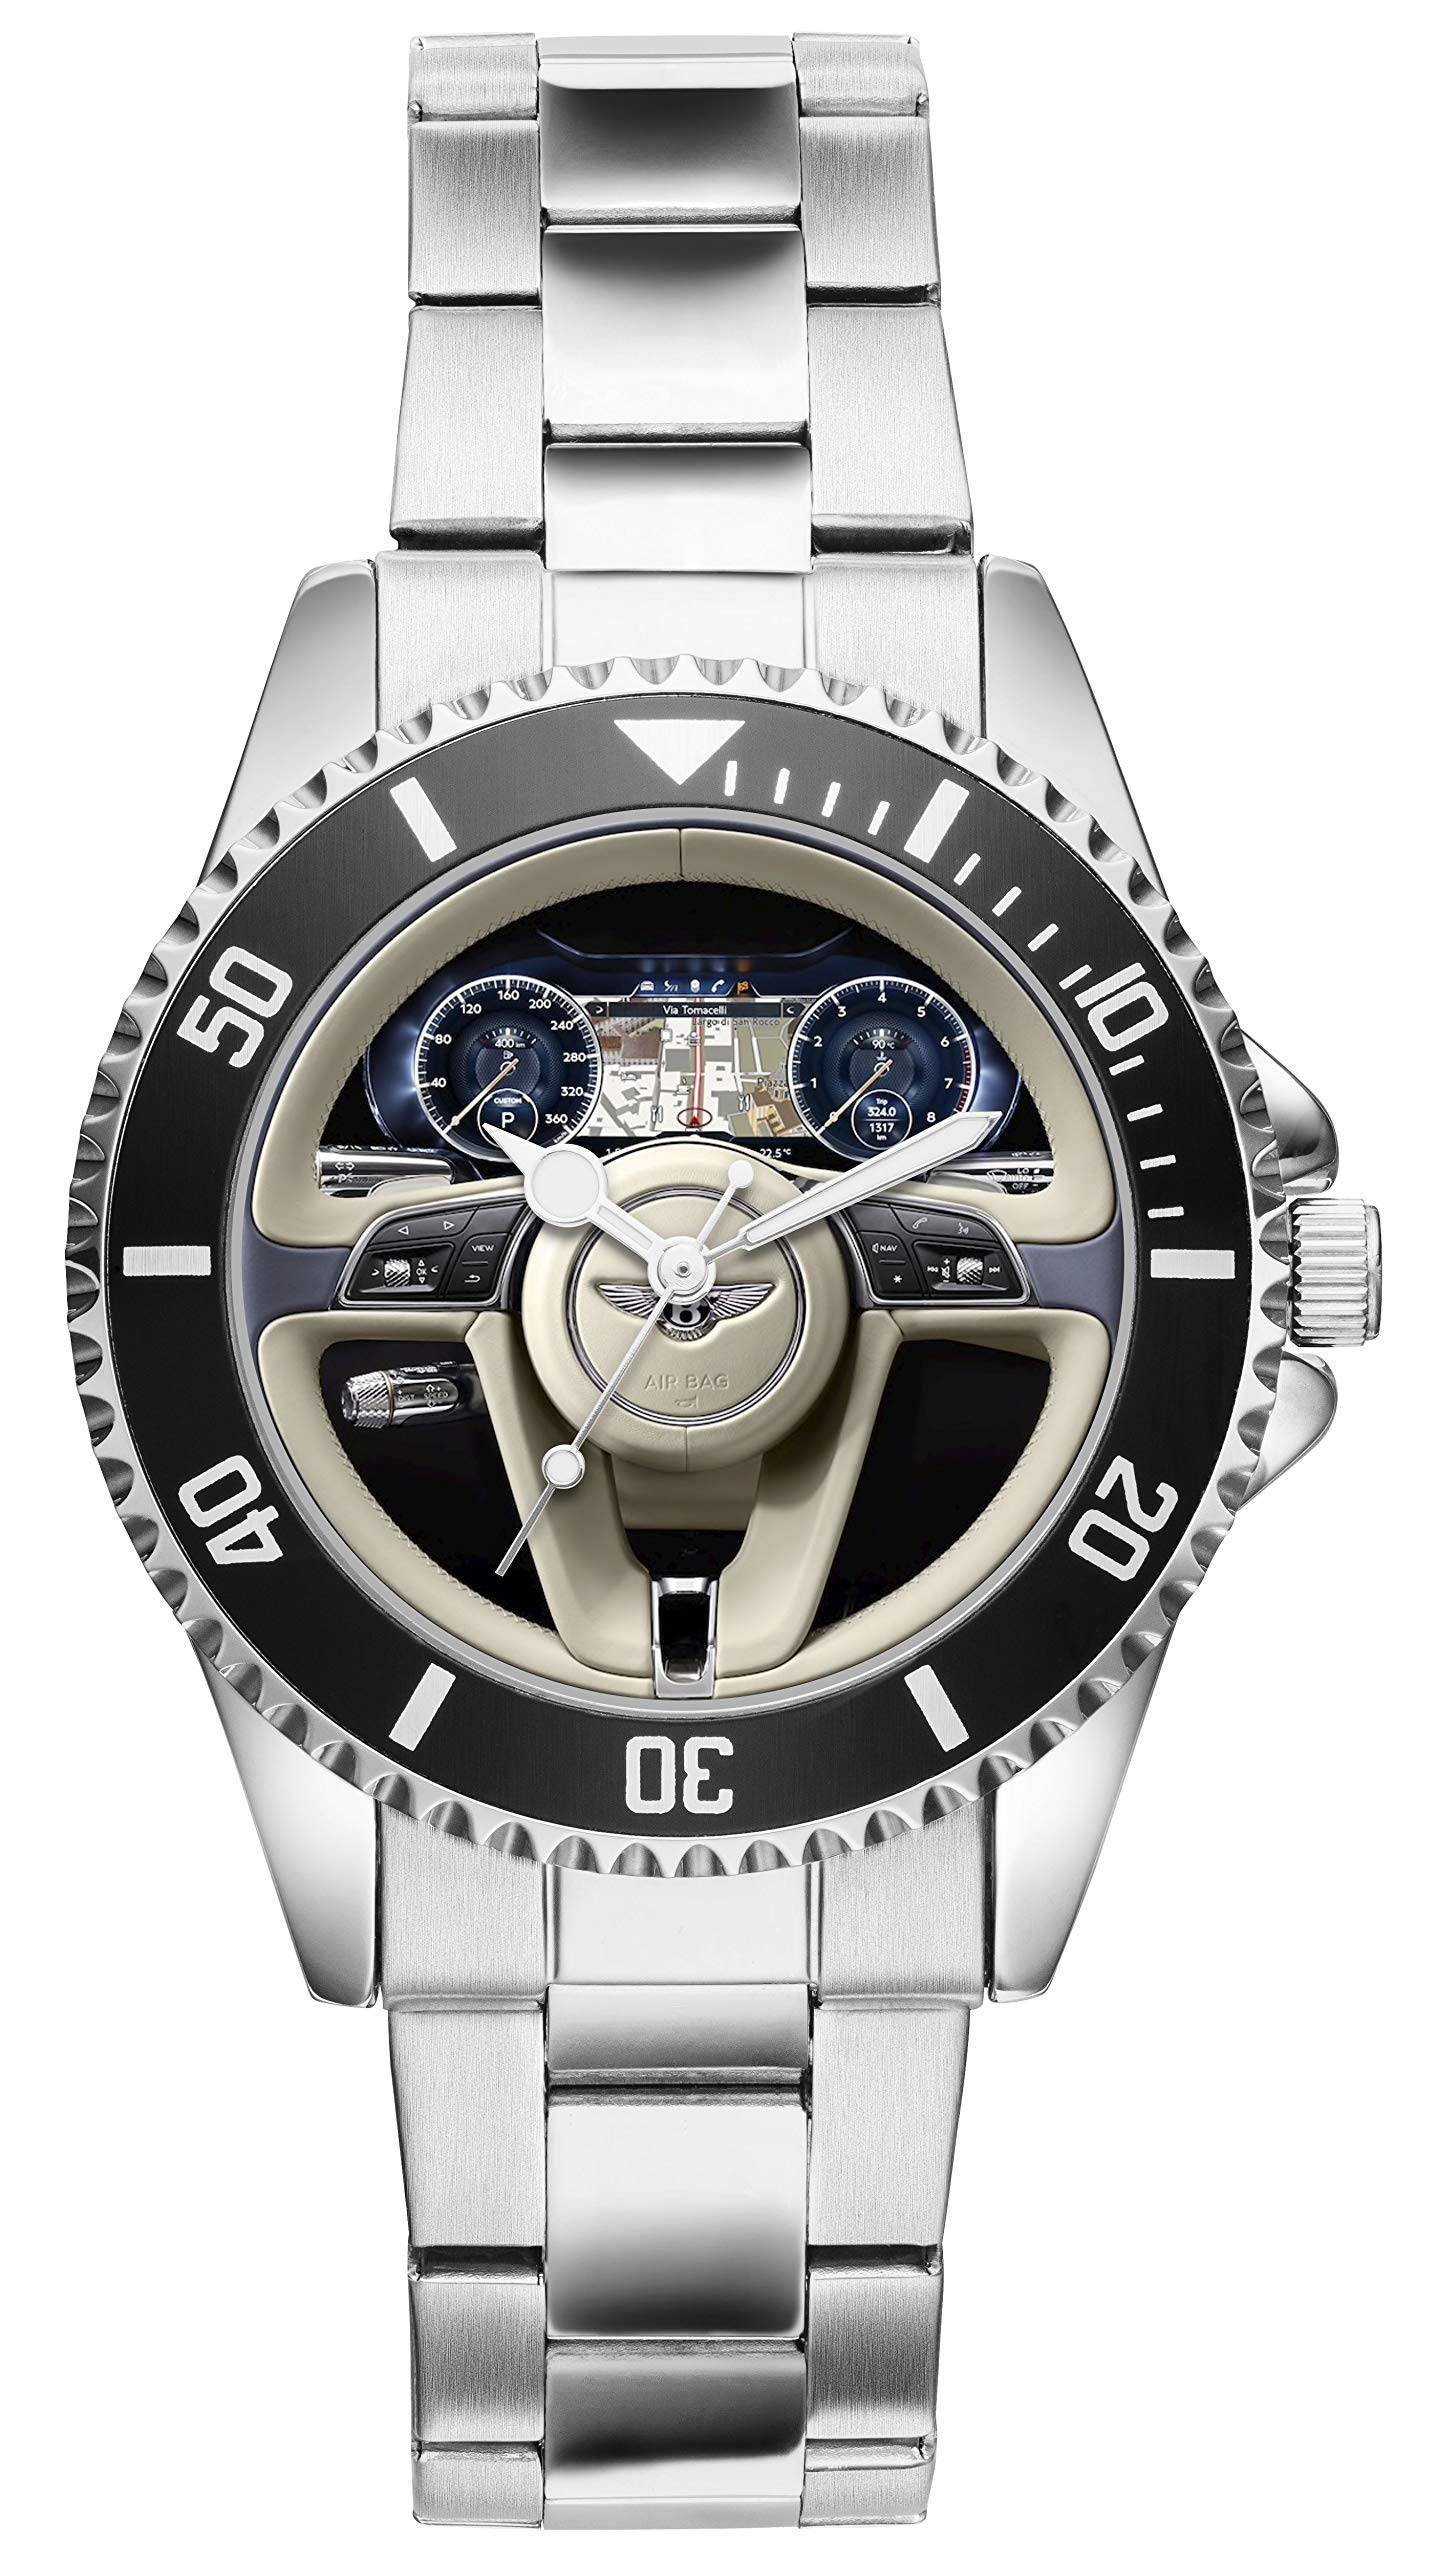 KIESENBERG Men's Watch Gift for Bentley Continental GT Fans Cockpit Quartz Analog Wrist Watch 20866